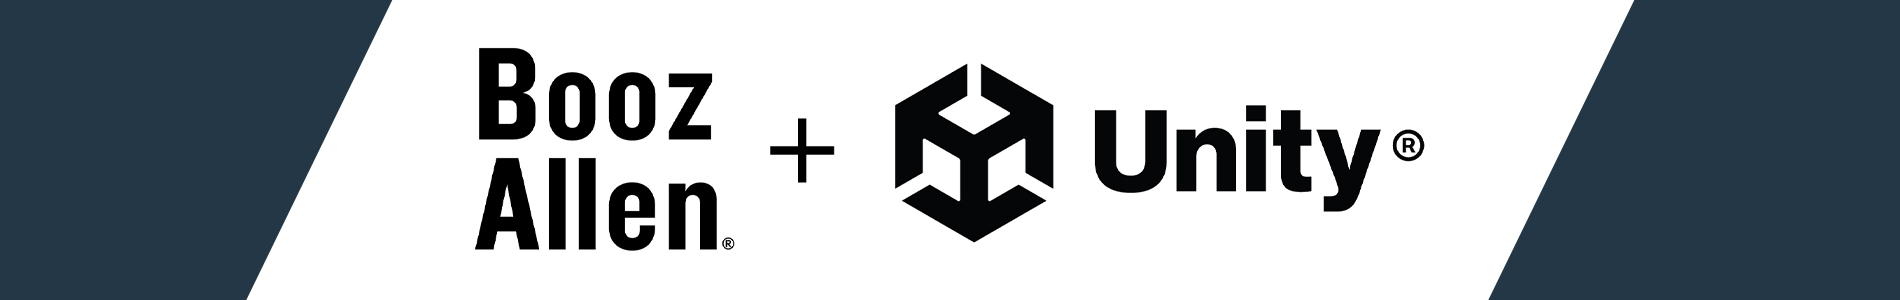 booz and unity partnership logo